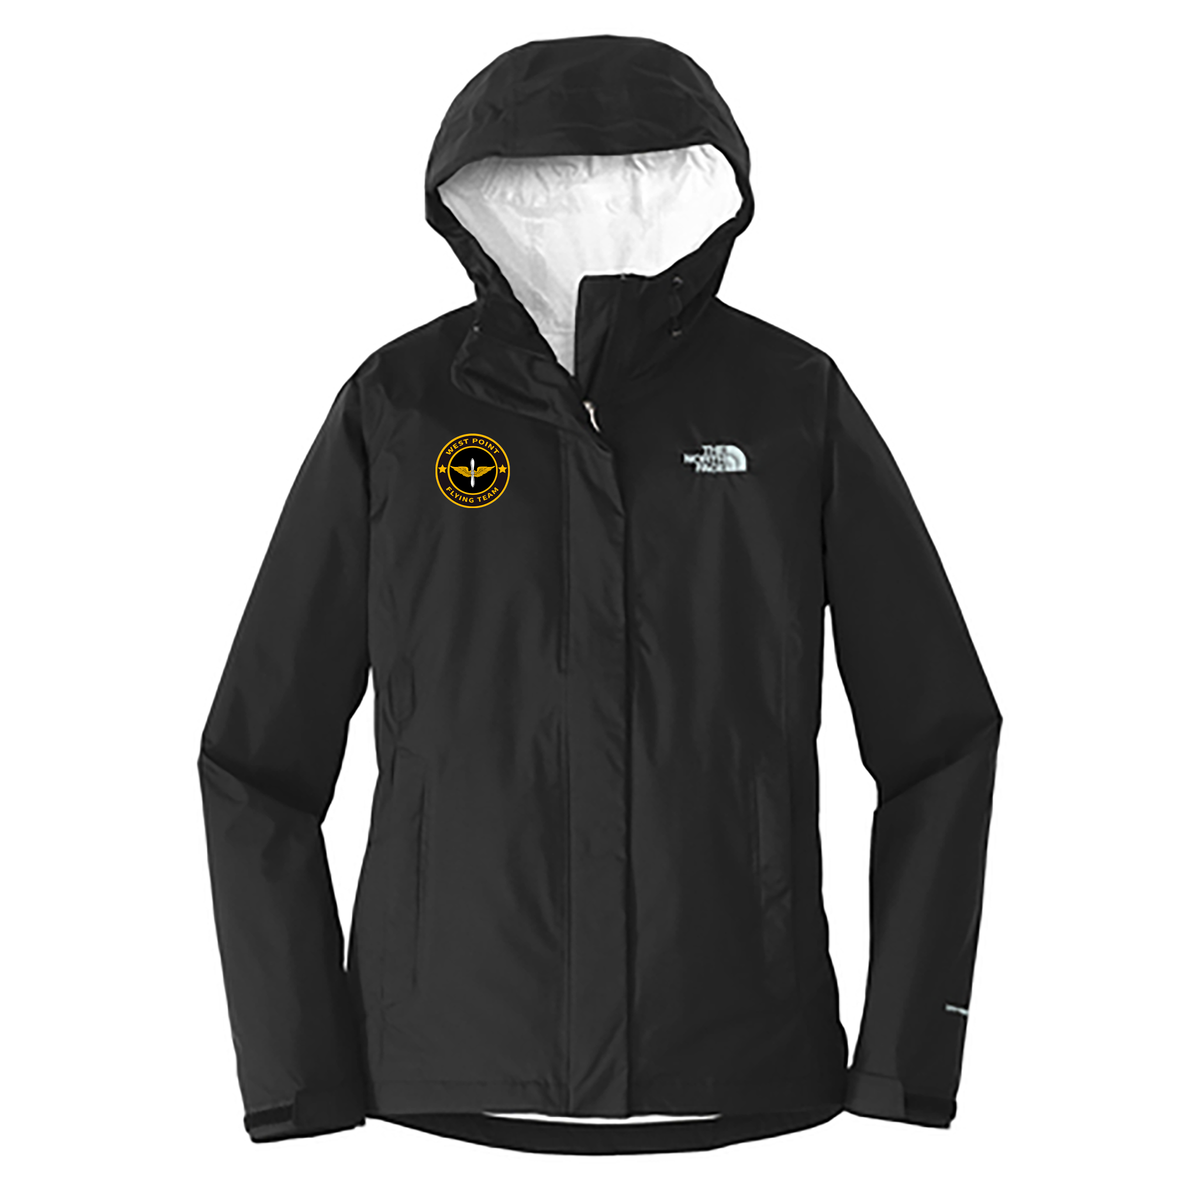 West Point Flight Team The North Face® Ladies DryVent™ Rain Jacket